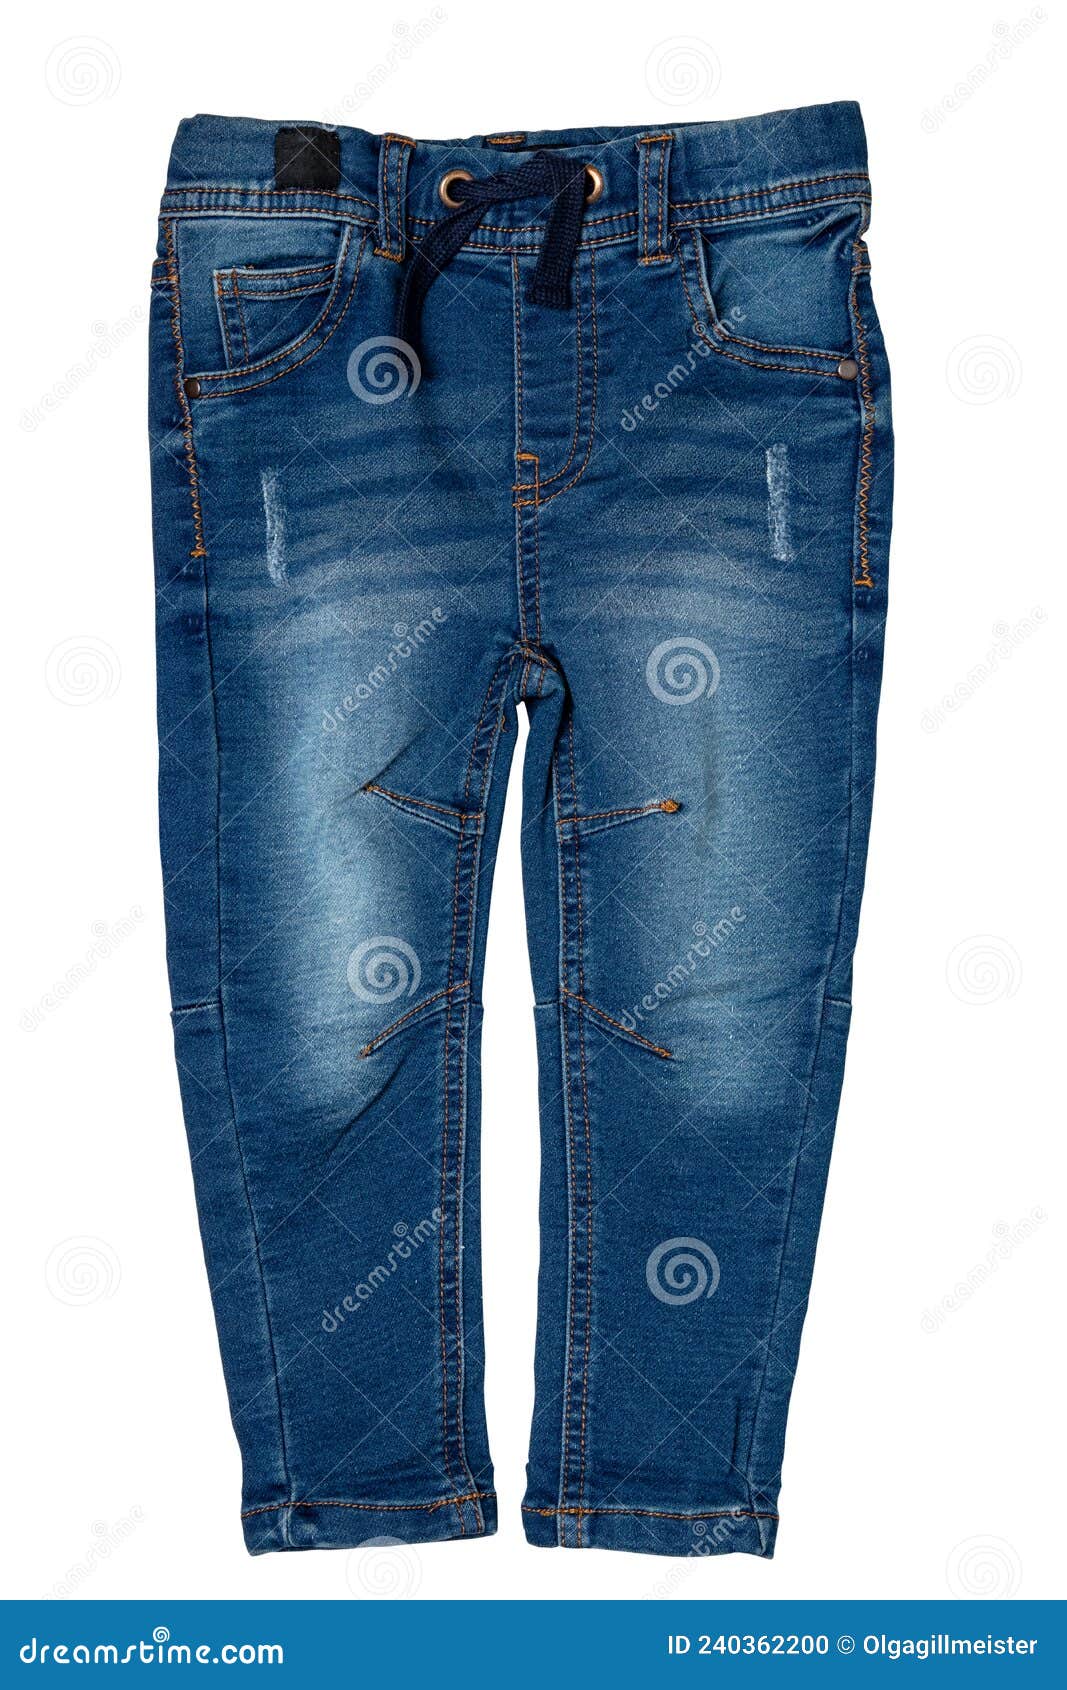 STONE ISLAND KIDS: Stylish Regular Tapered Pants for Boys